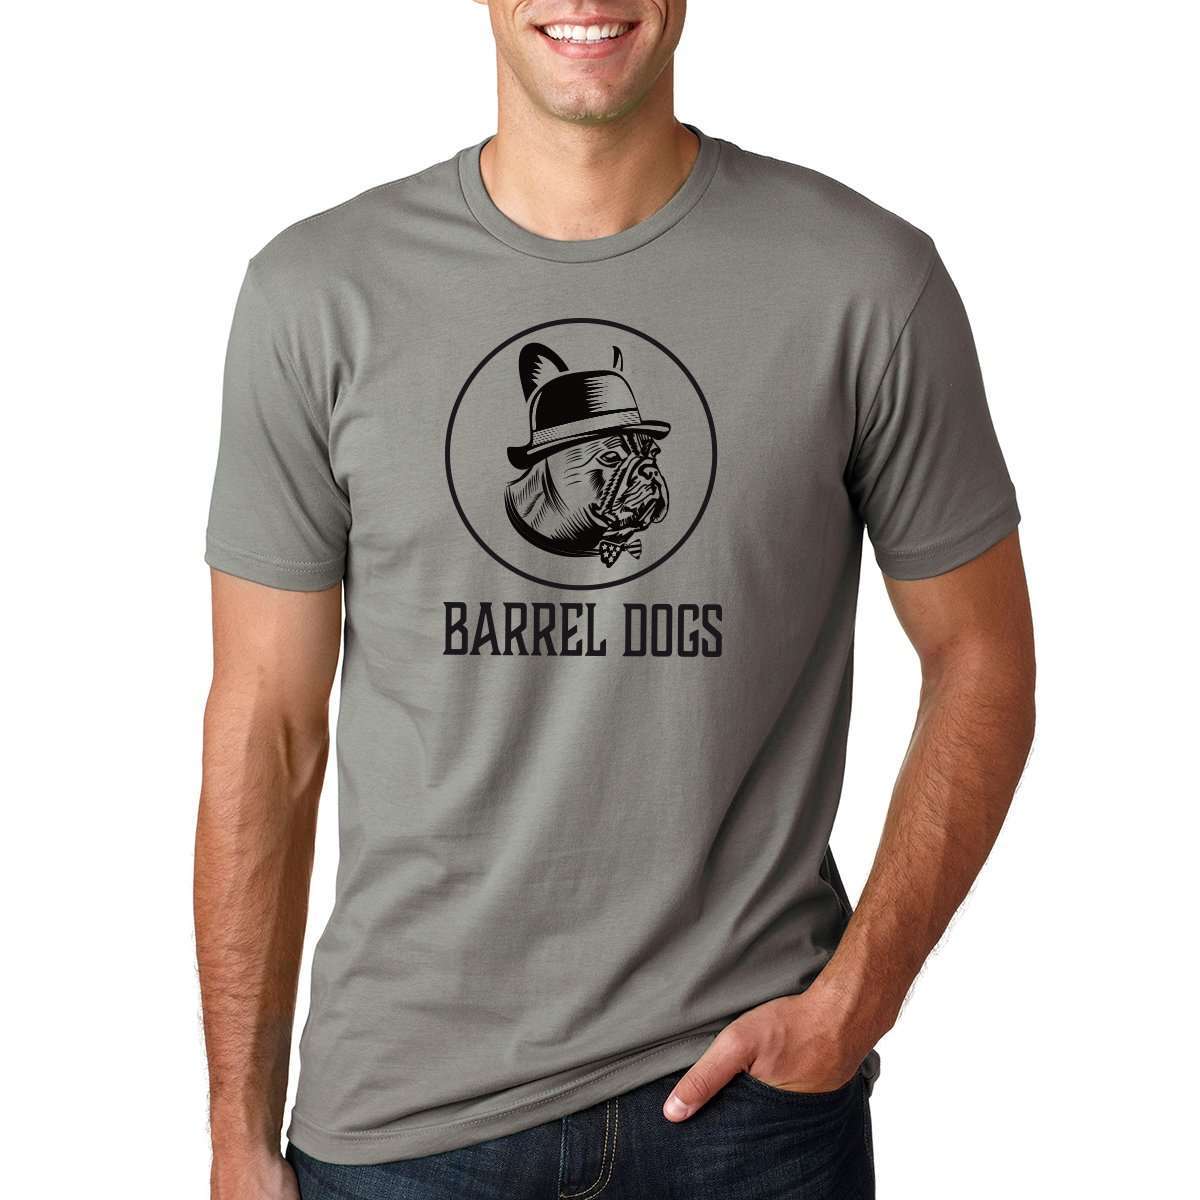 Barrel Dogs Logo Men's Tee - Barrel Dogs